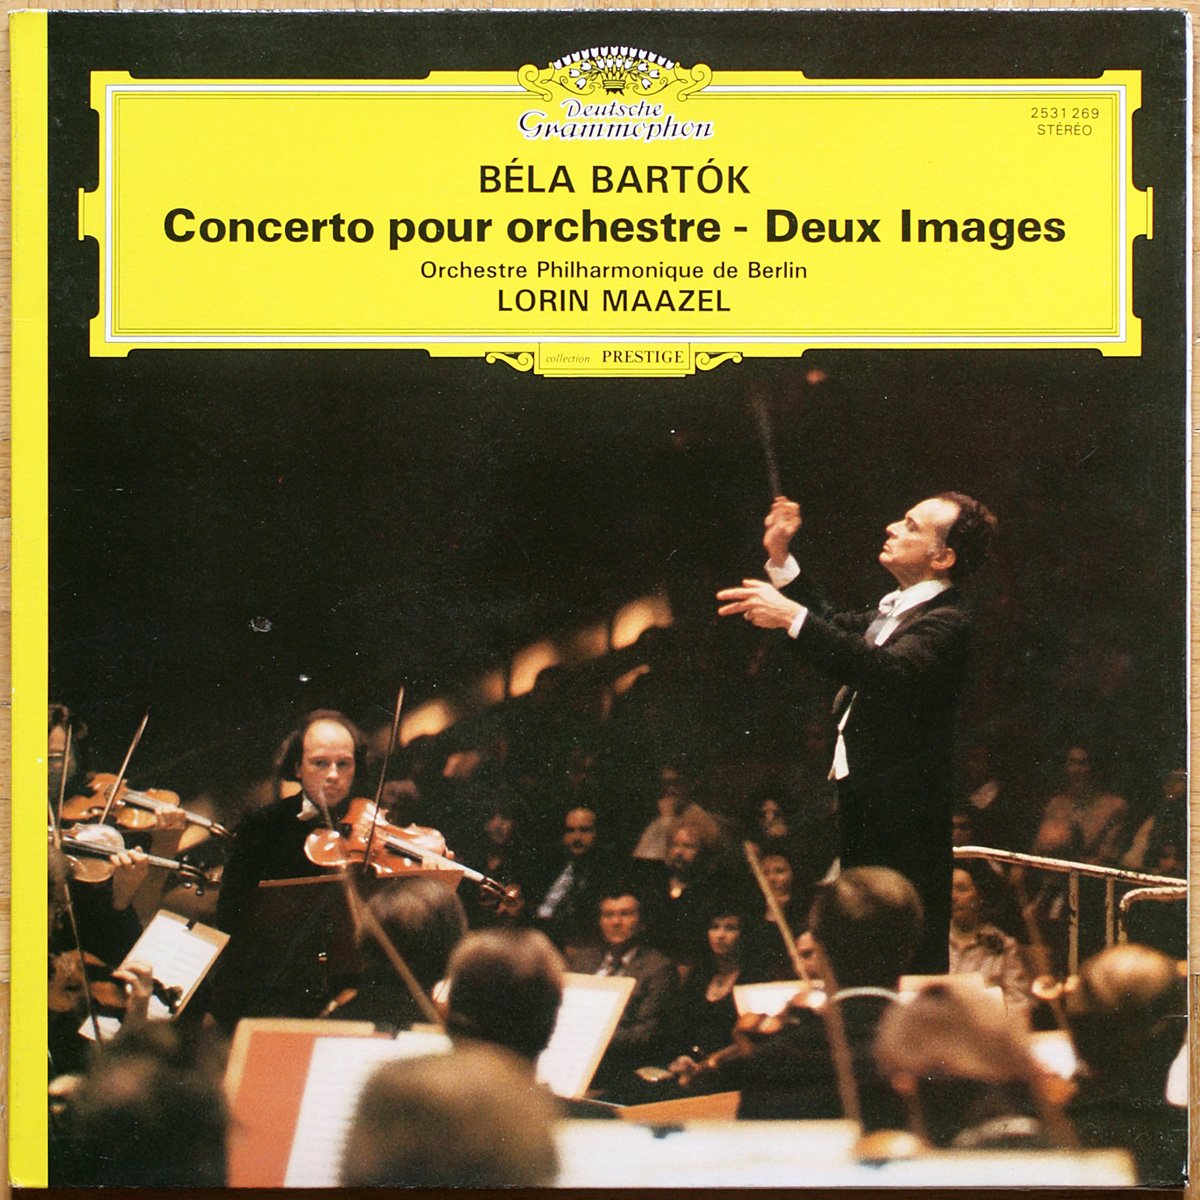 Bartók • Concerto pour orchestre – Deux images • Konzert für Orchester – Zwei Bilder • Concerto for orchestra • DGG 2531 269 • Berliner Philharmoniker • Lorin Maazel